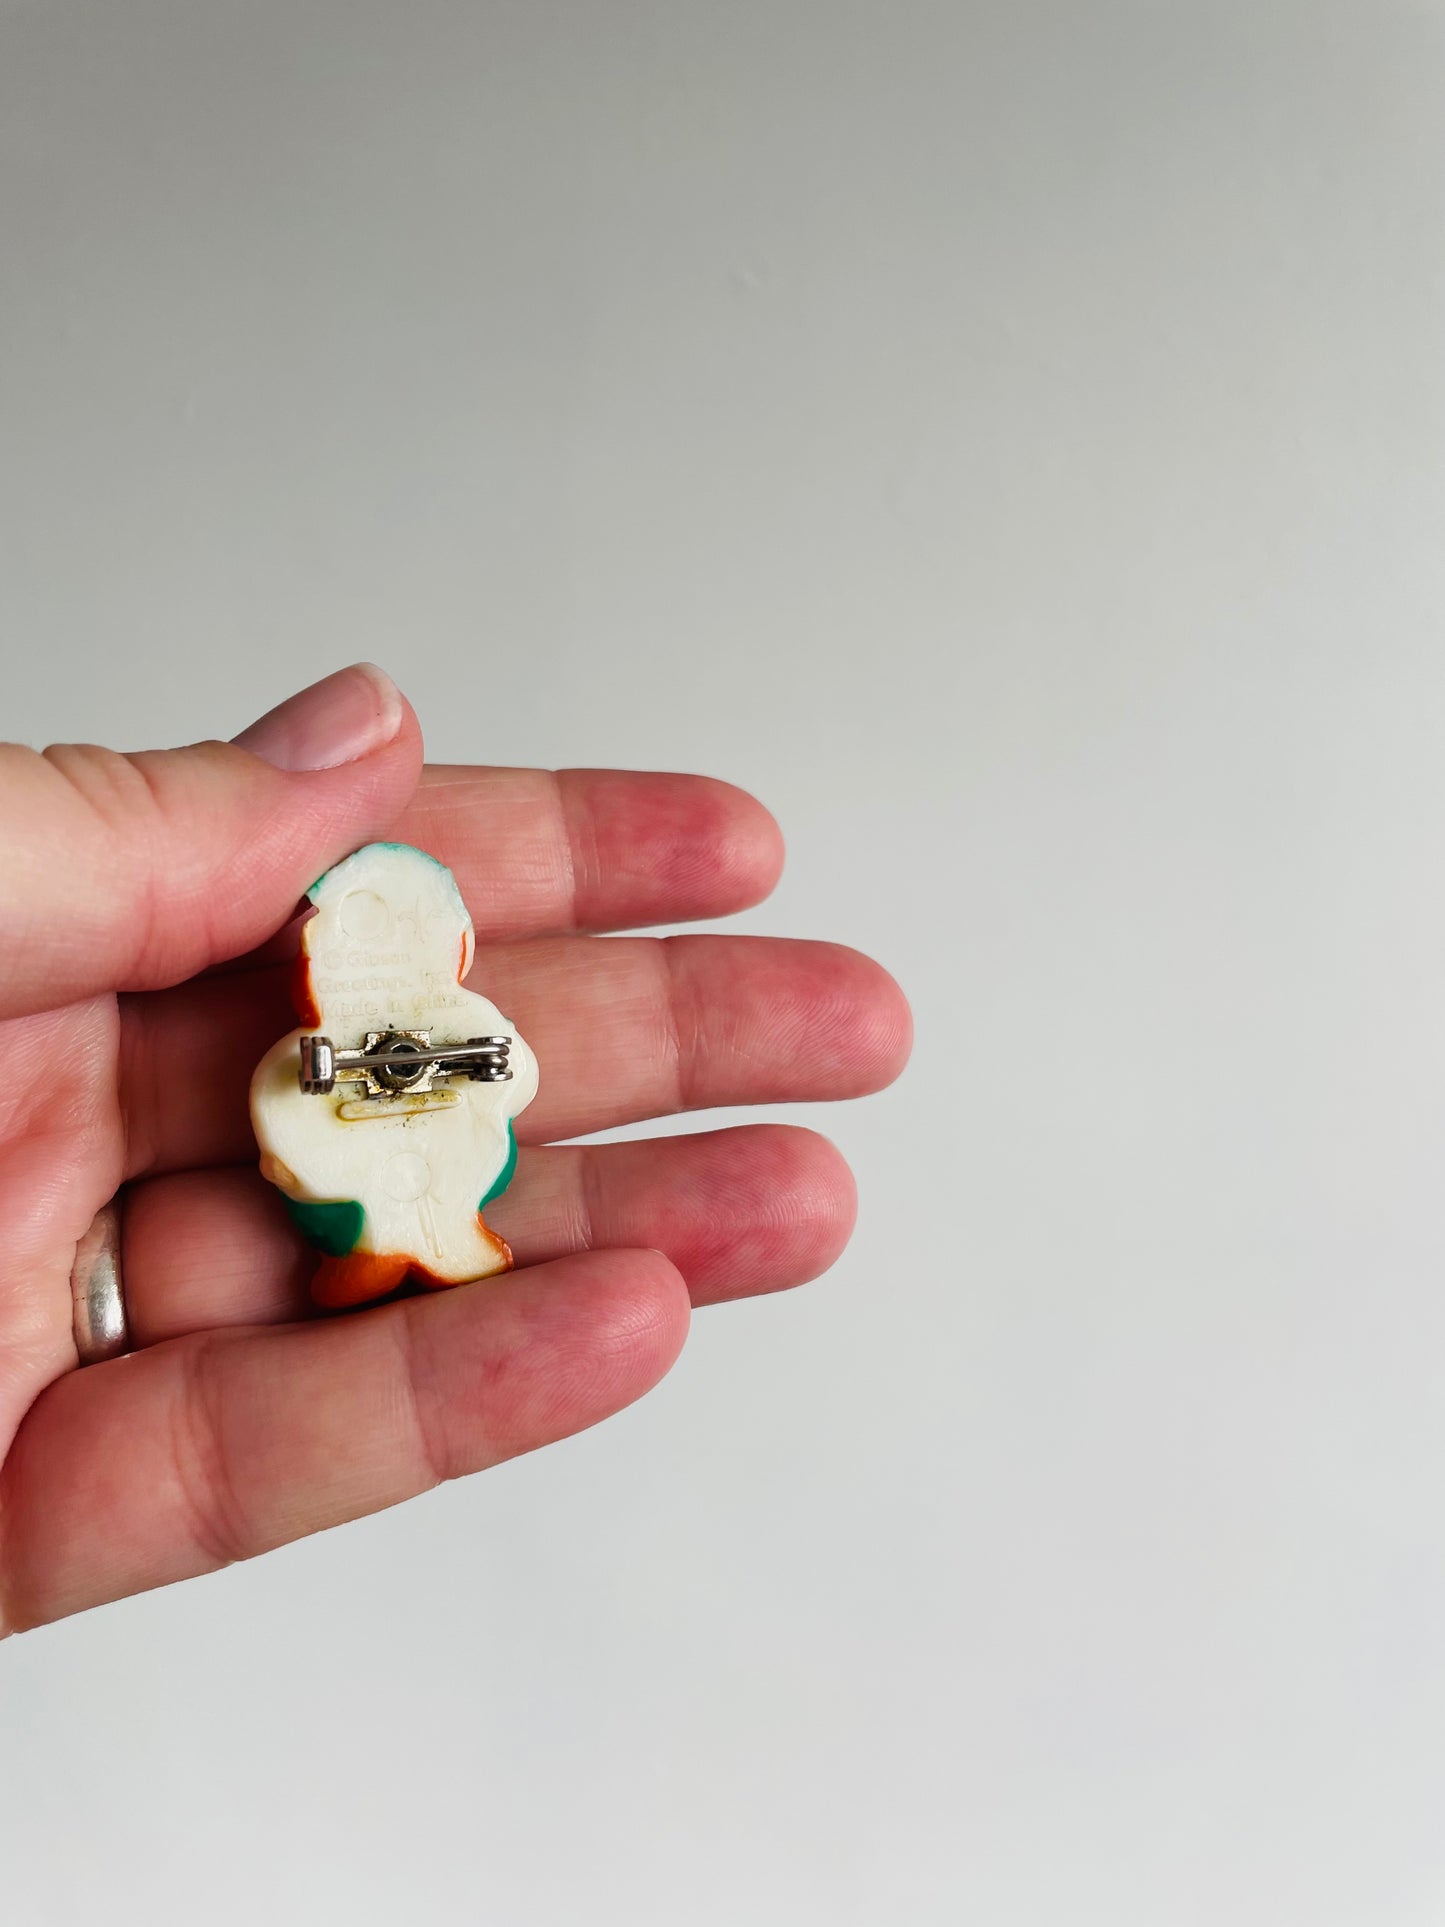 St. Patrick's Day Holiday Pin - Tiny Leprechaun with Shamrock - Gibson Greetings Inc.